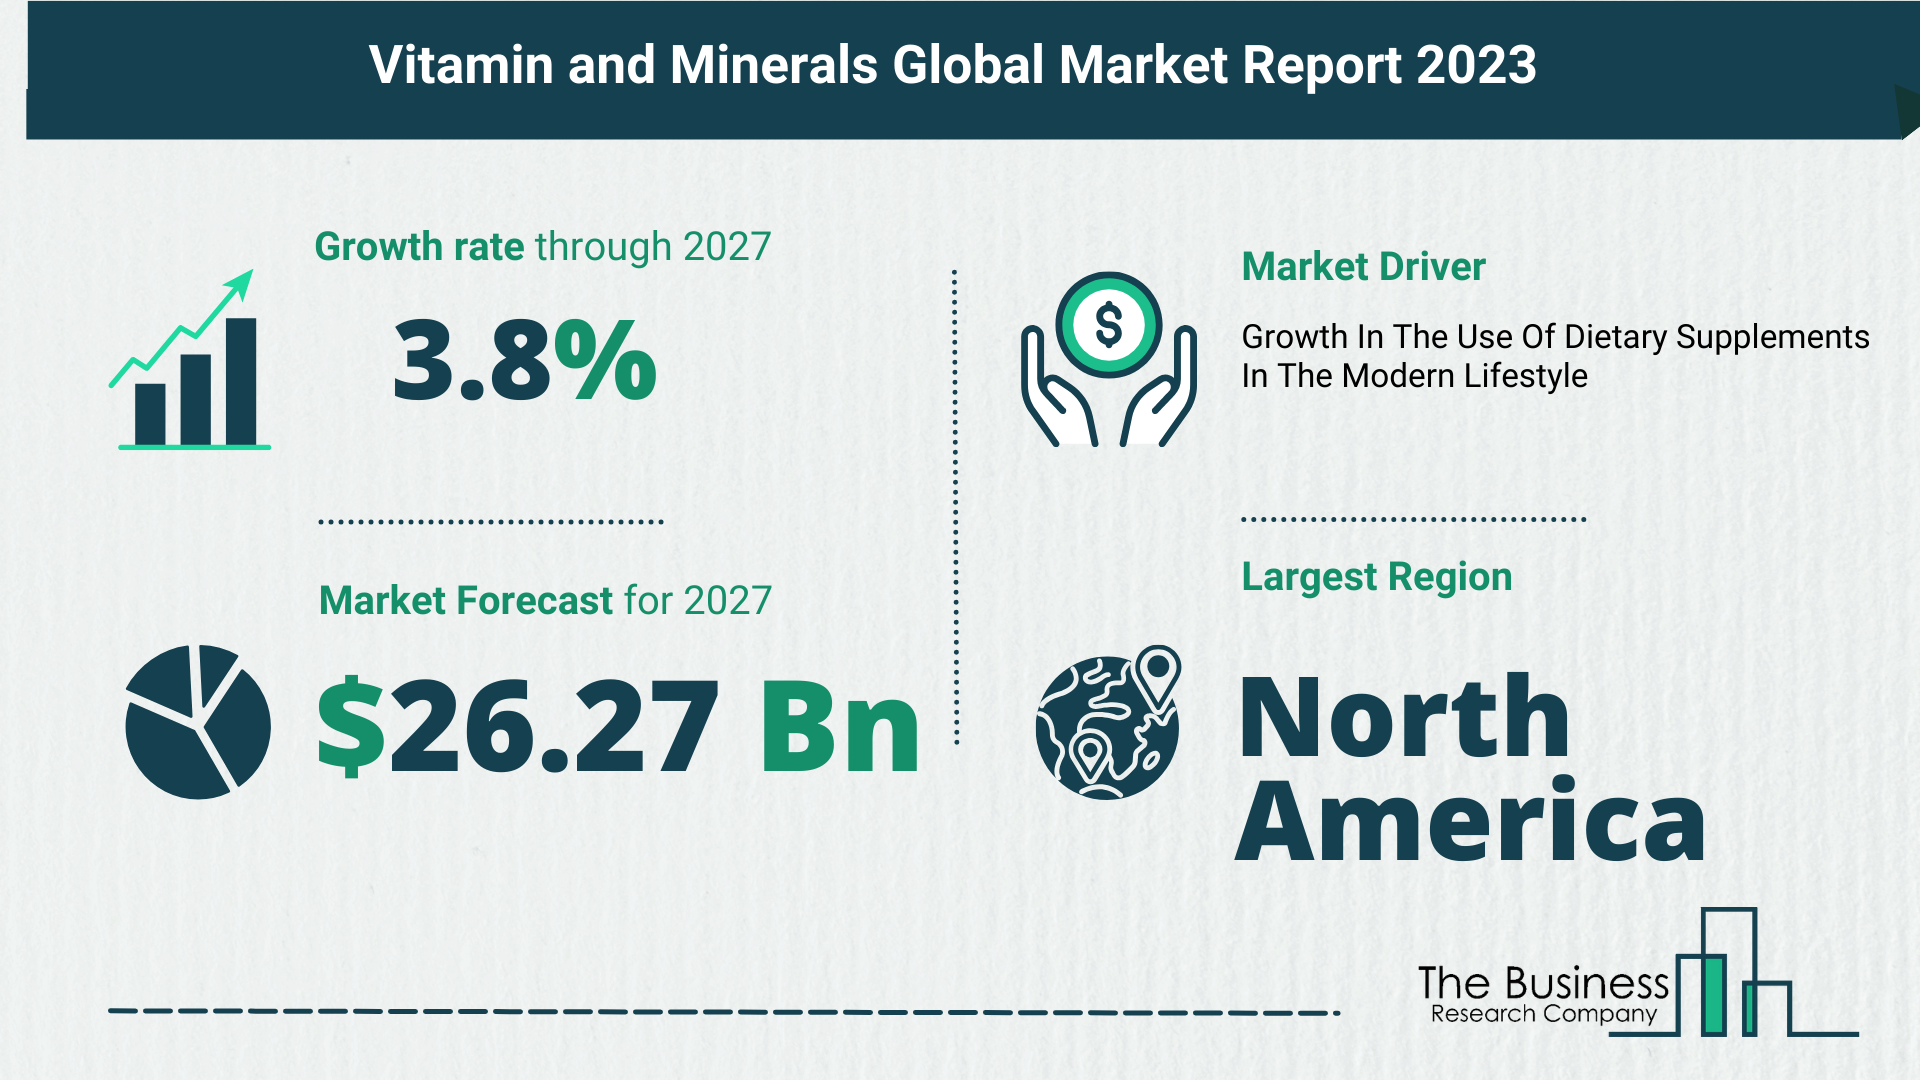 Global Vitamin and Minerals Market